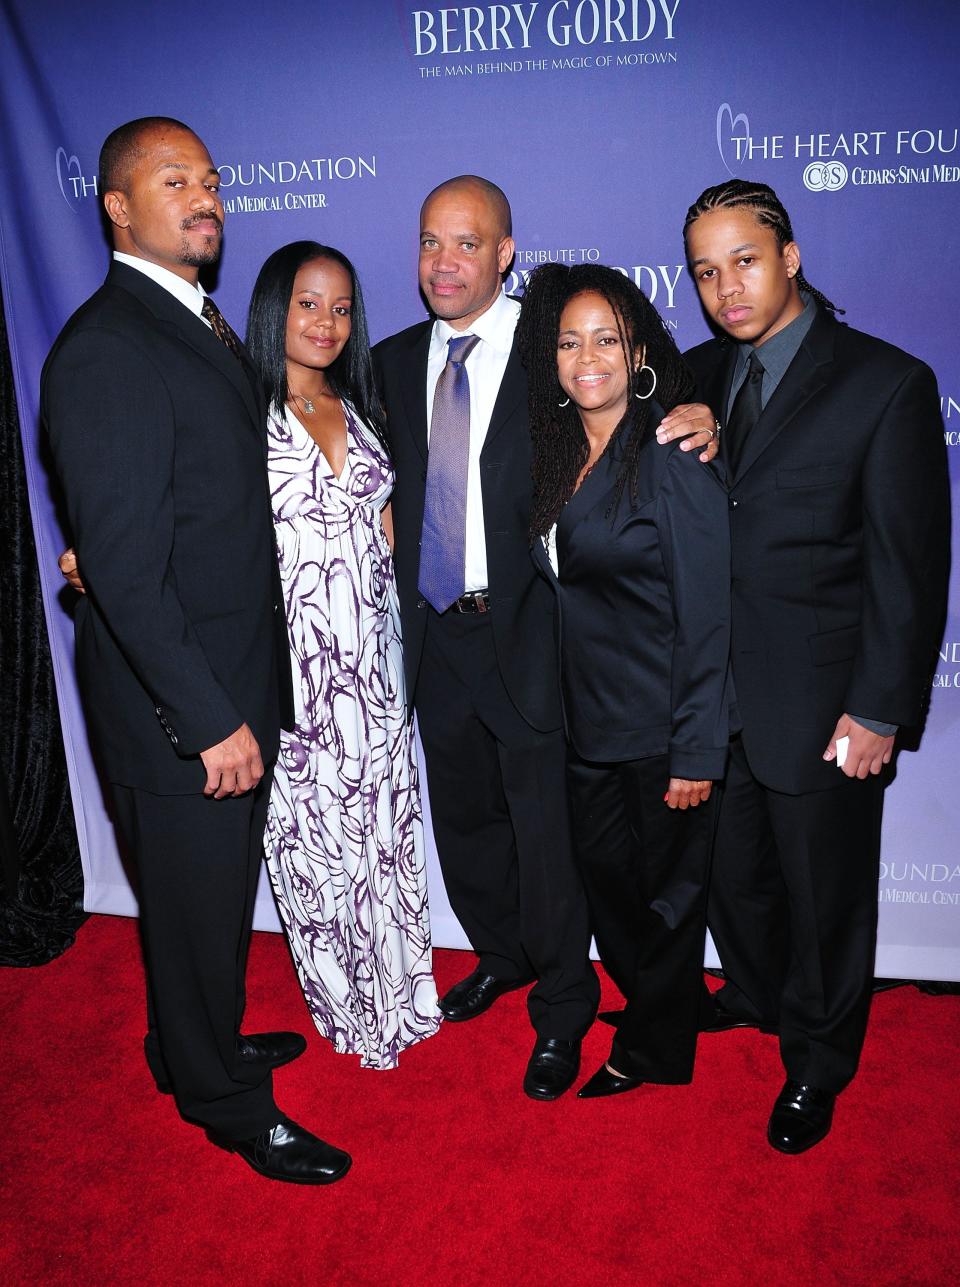 From left to right: Jermaine Jackson Jr., Autumn Jackson, Kerry Gordy, Hazel Gordy, and Jaimy Jackson.